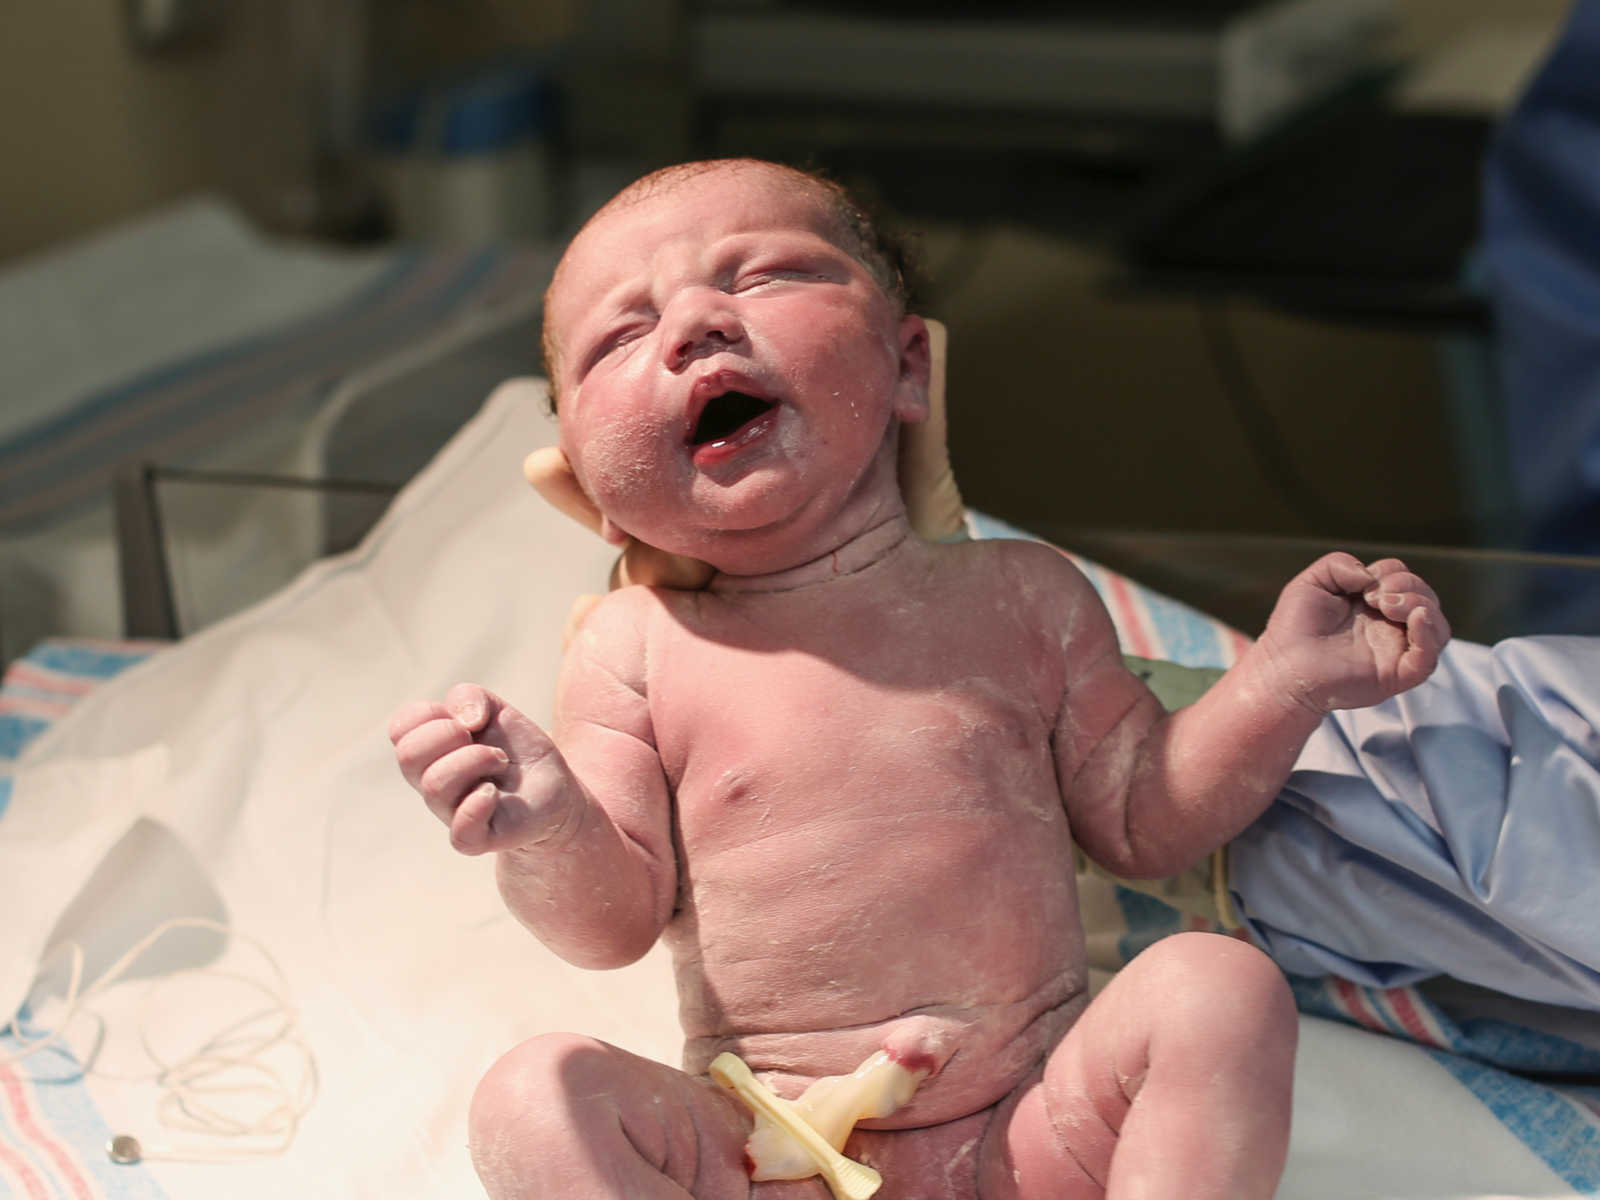 Nurse holding up newborn whose head was still stuck in amniotic sac